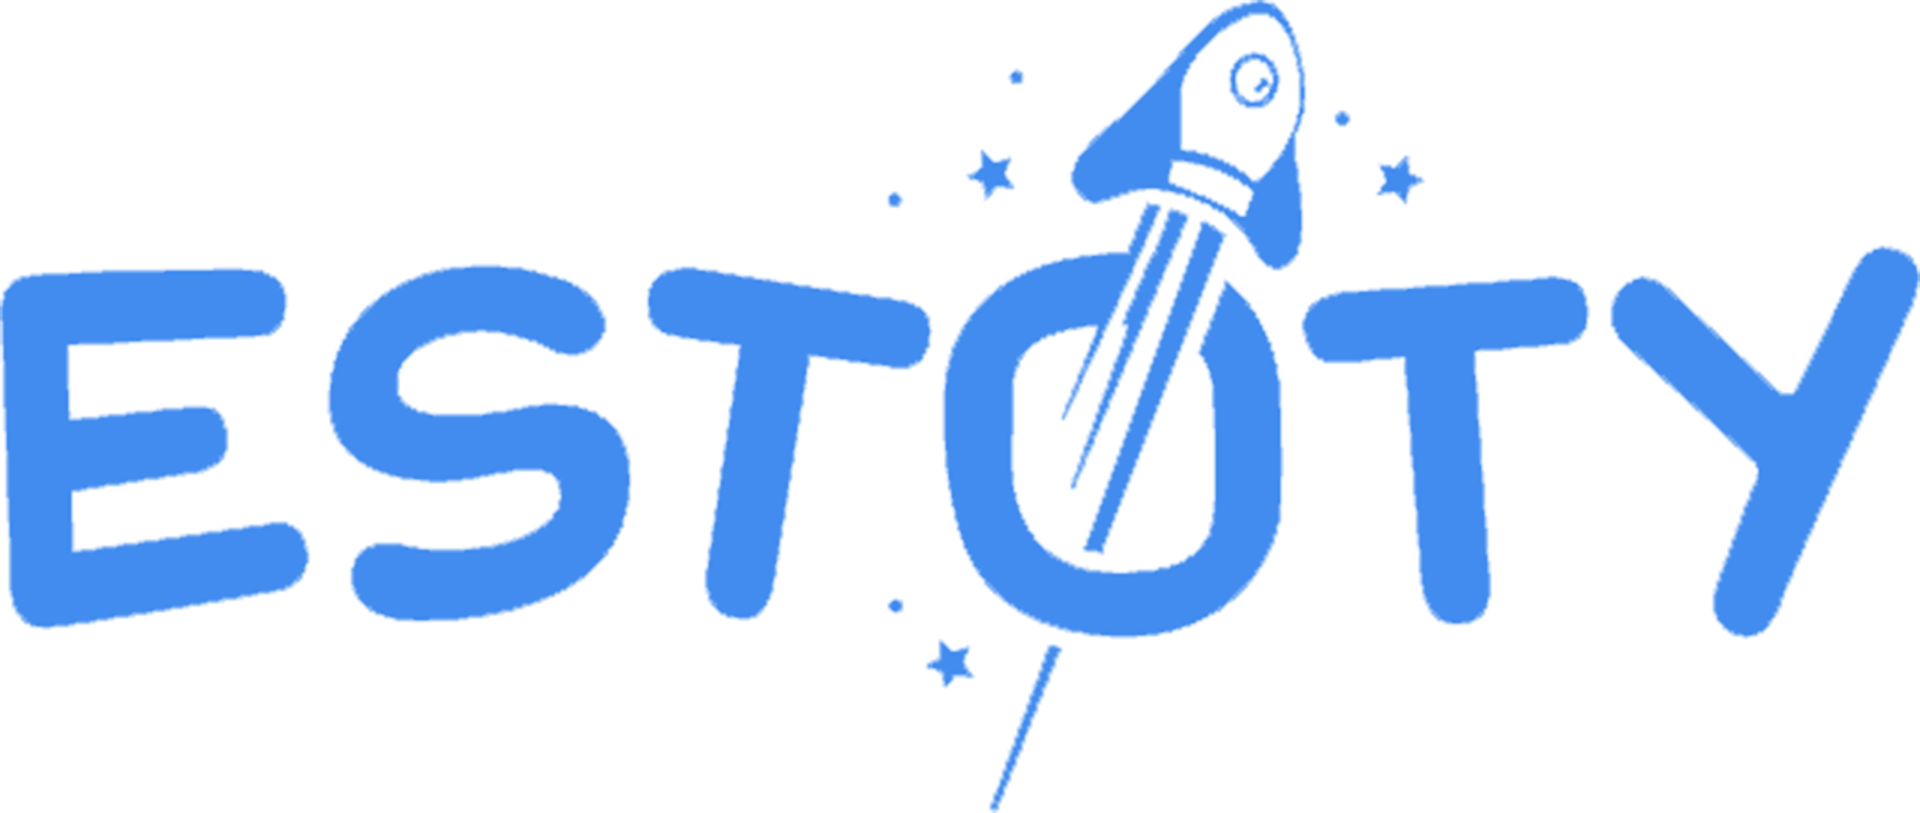 Estoty | Lead investor